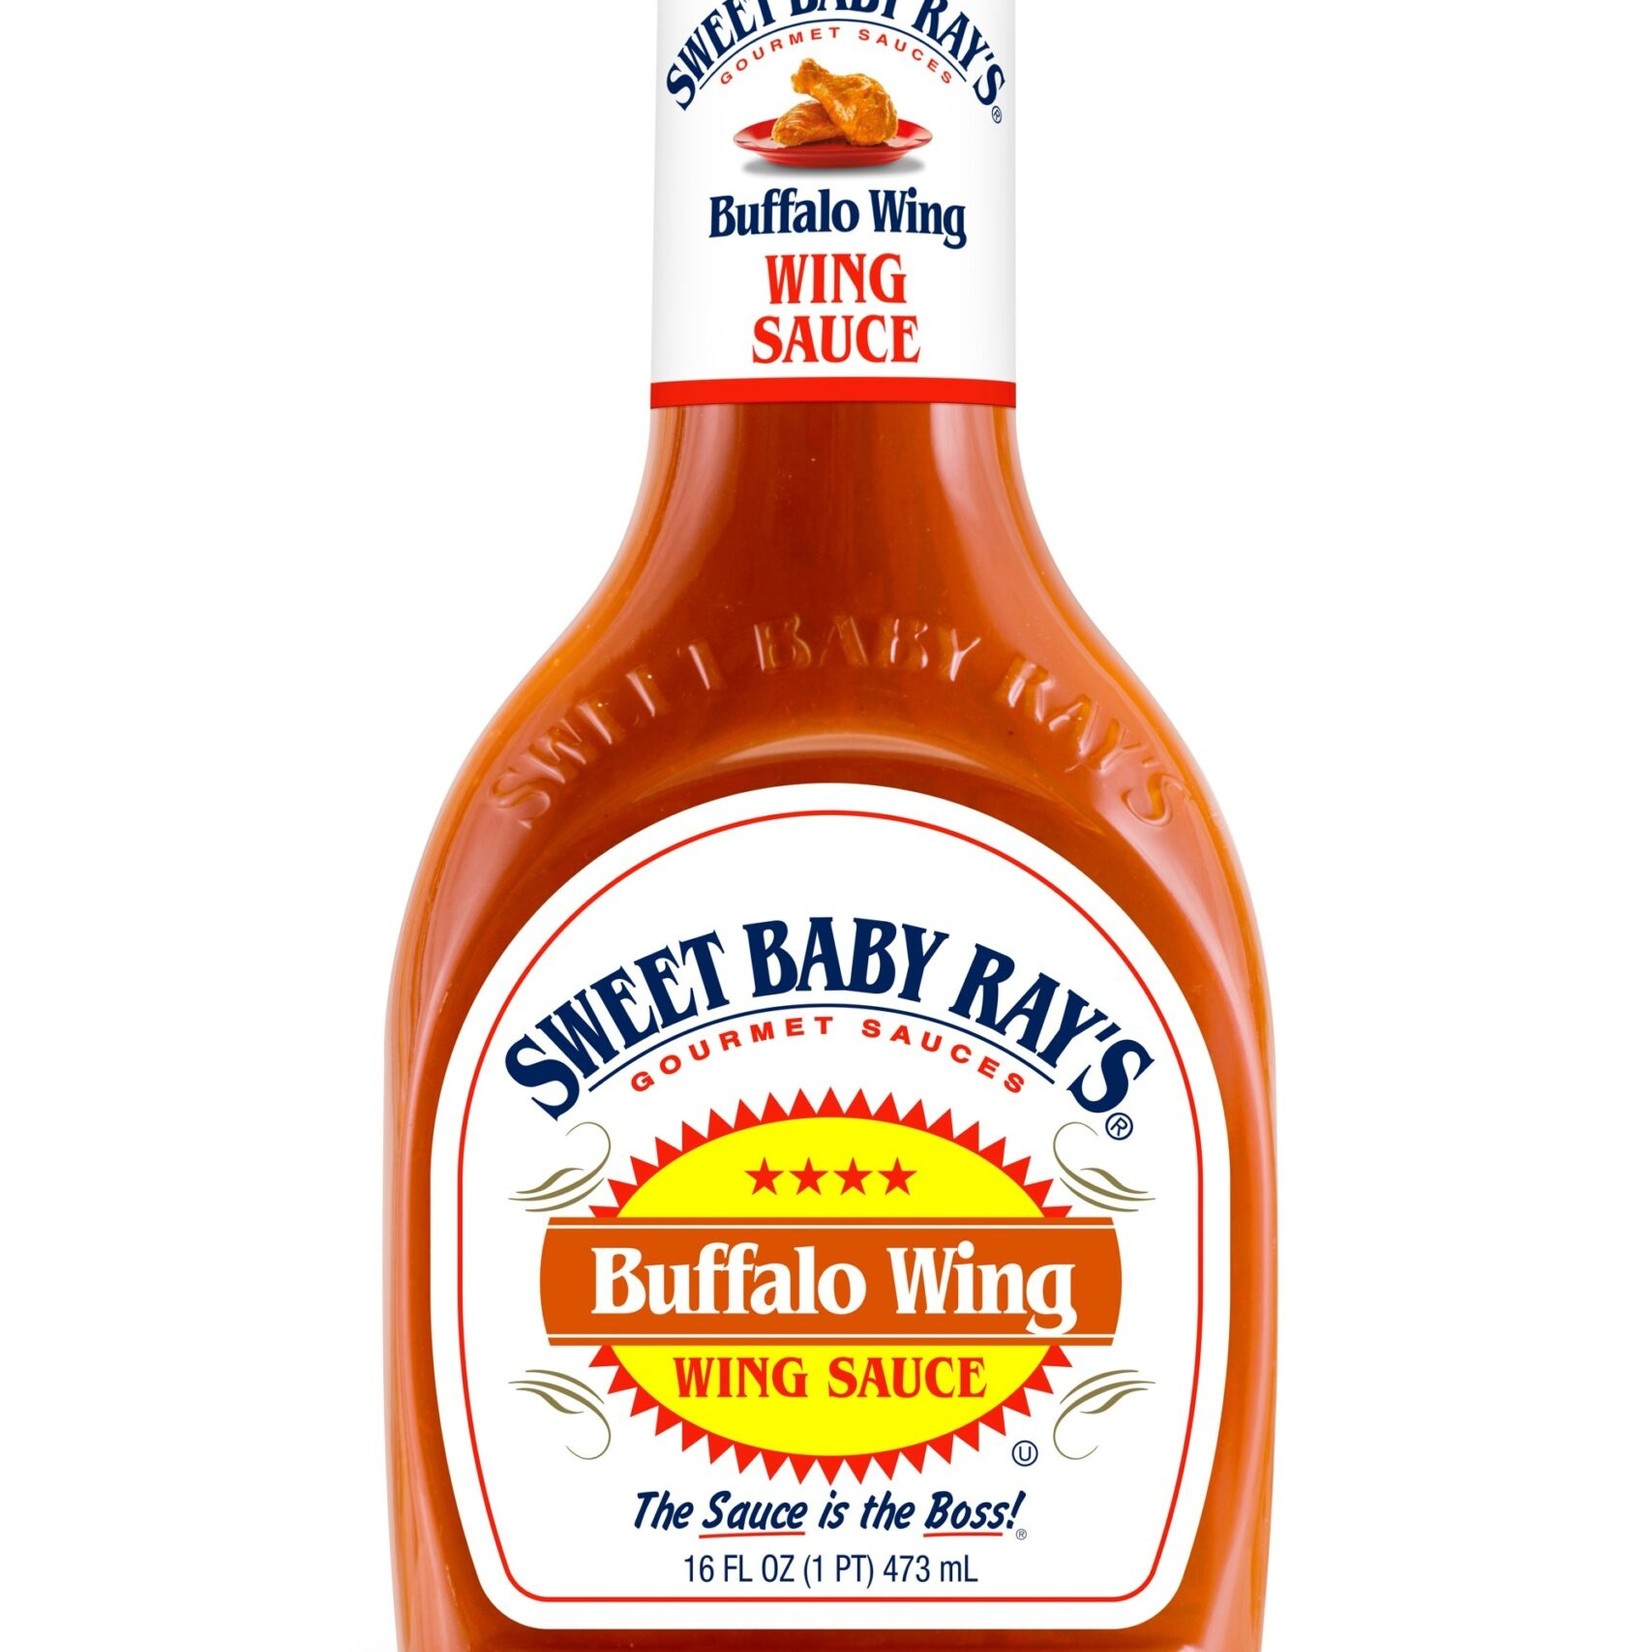 Sweet Baby Ray Buffalo Wing Sauce